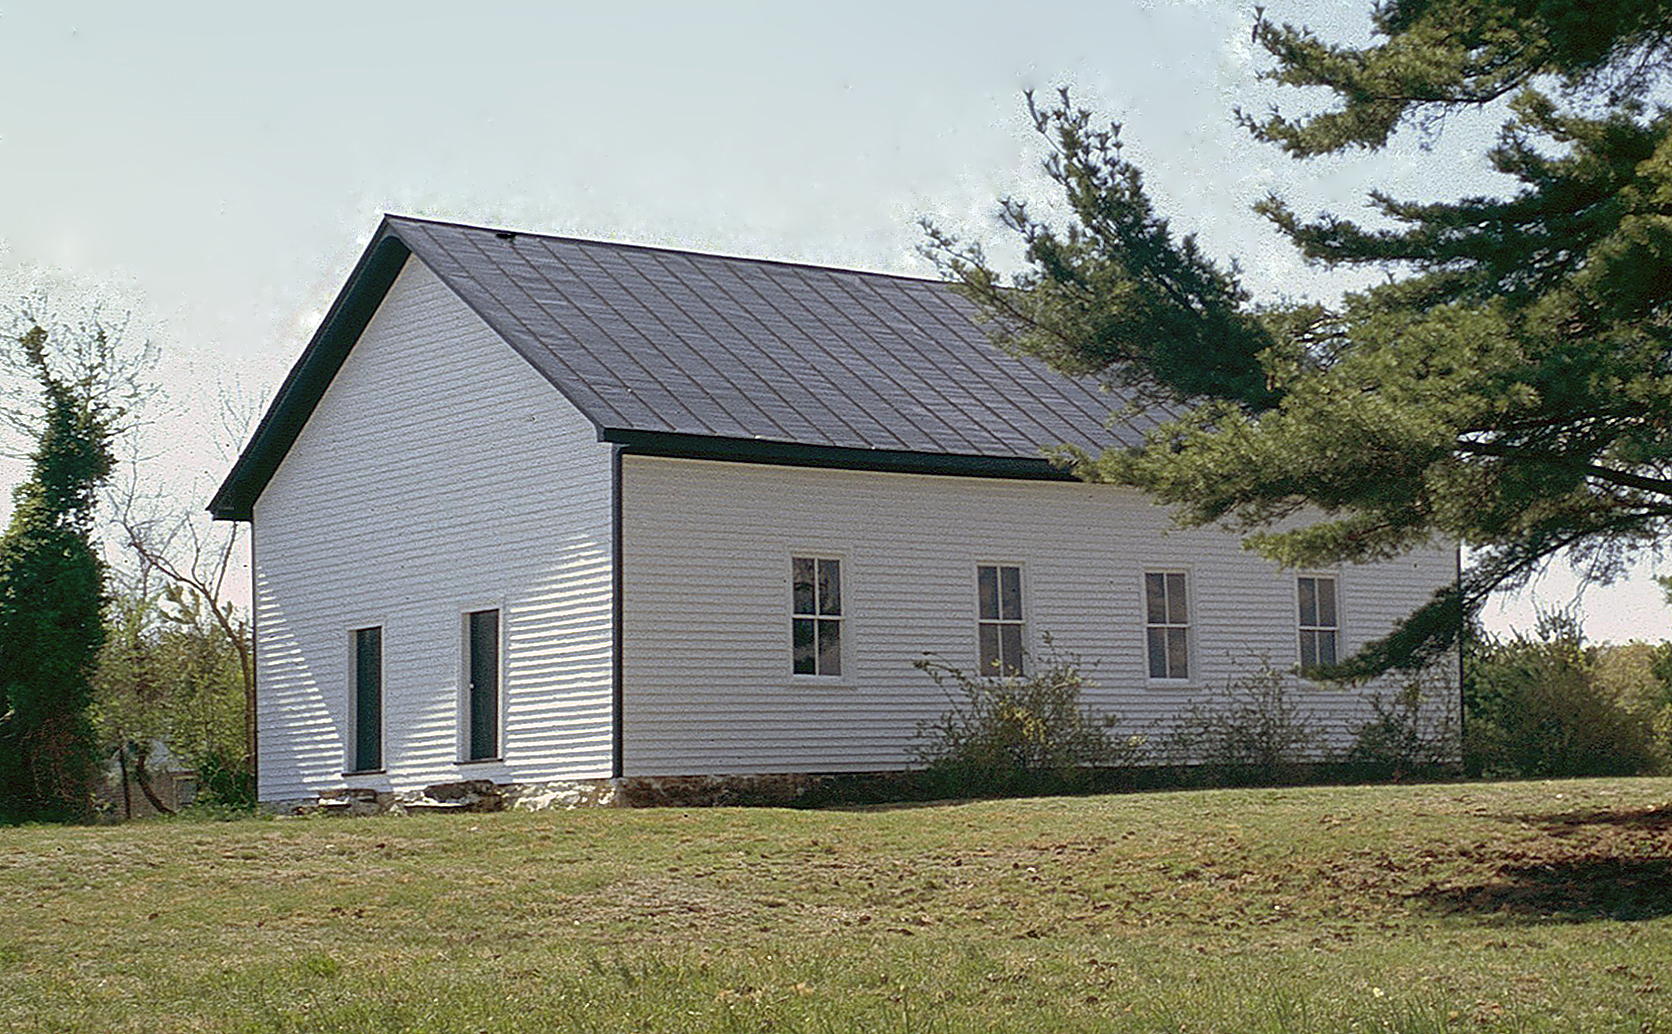 Earlysville Union Church